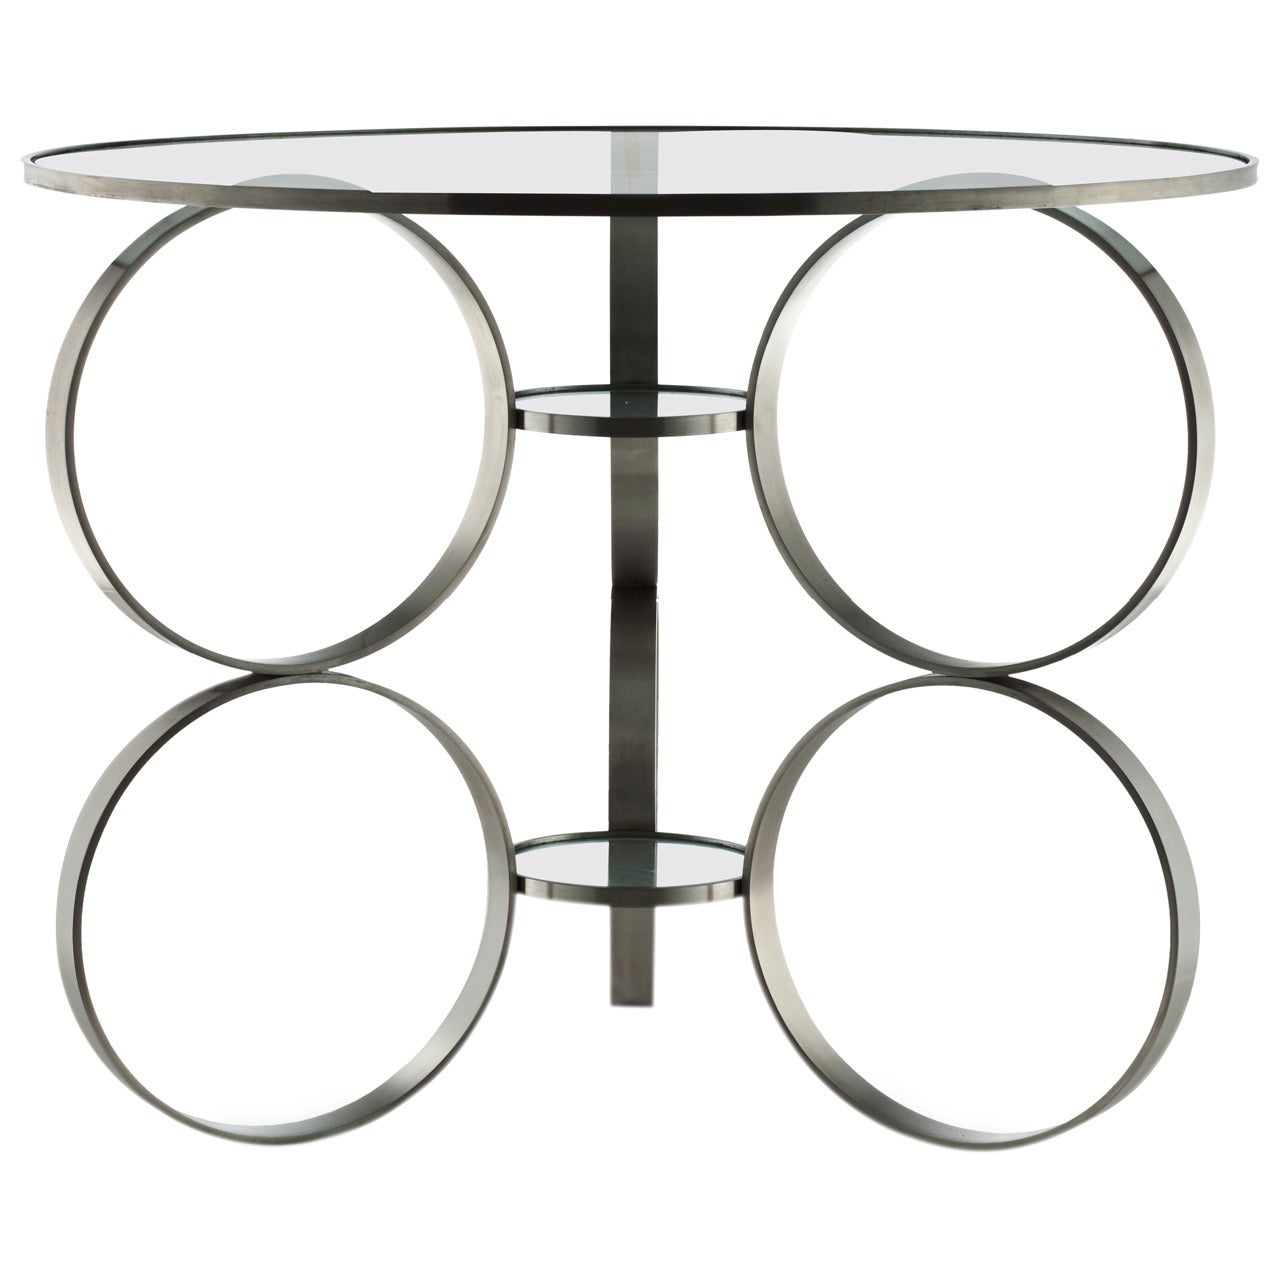 "Rings of Steel" Table, Designed by Laurie Beckerman in 2006